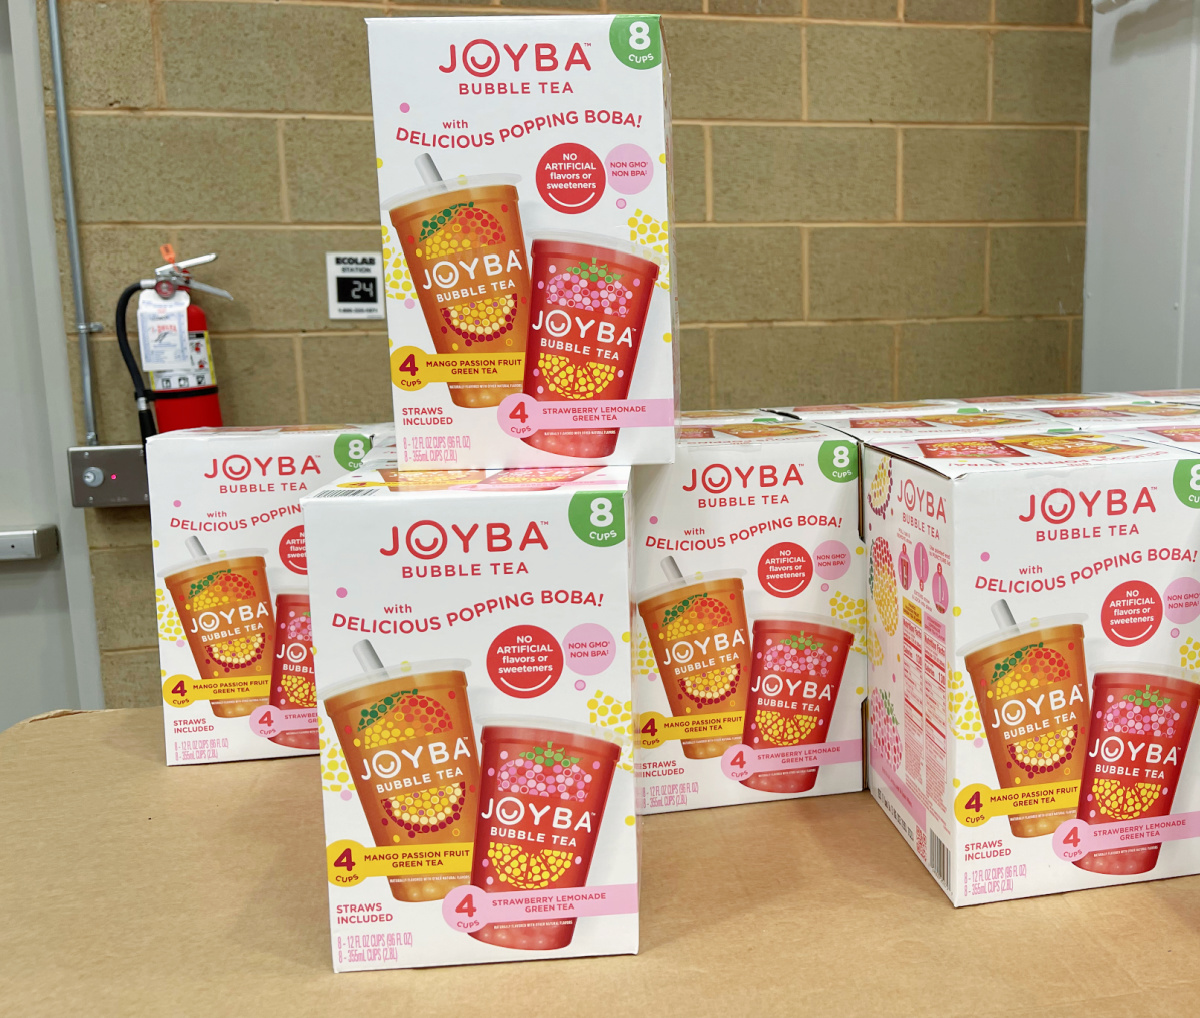 Joyba Bubble Tea in 8-packs on display in-store